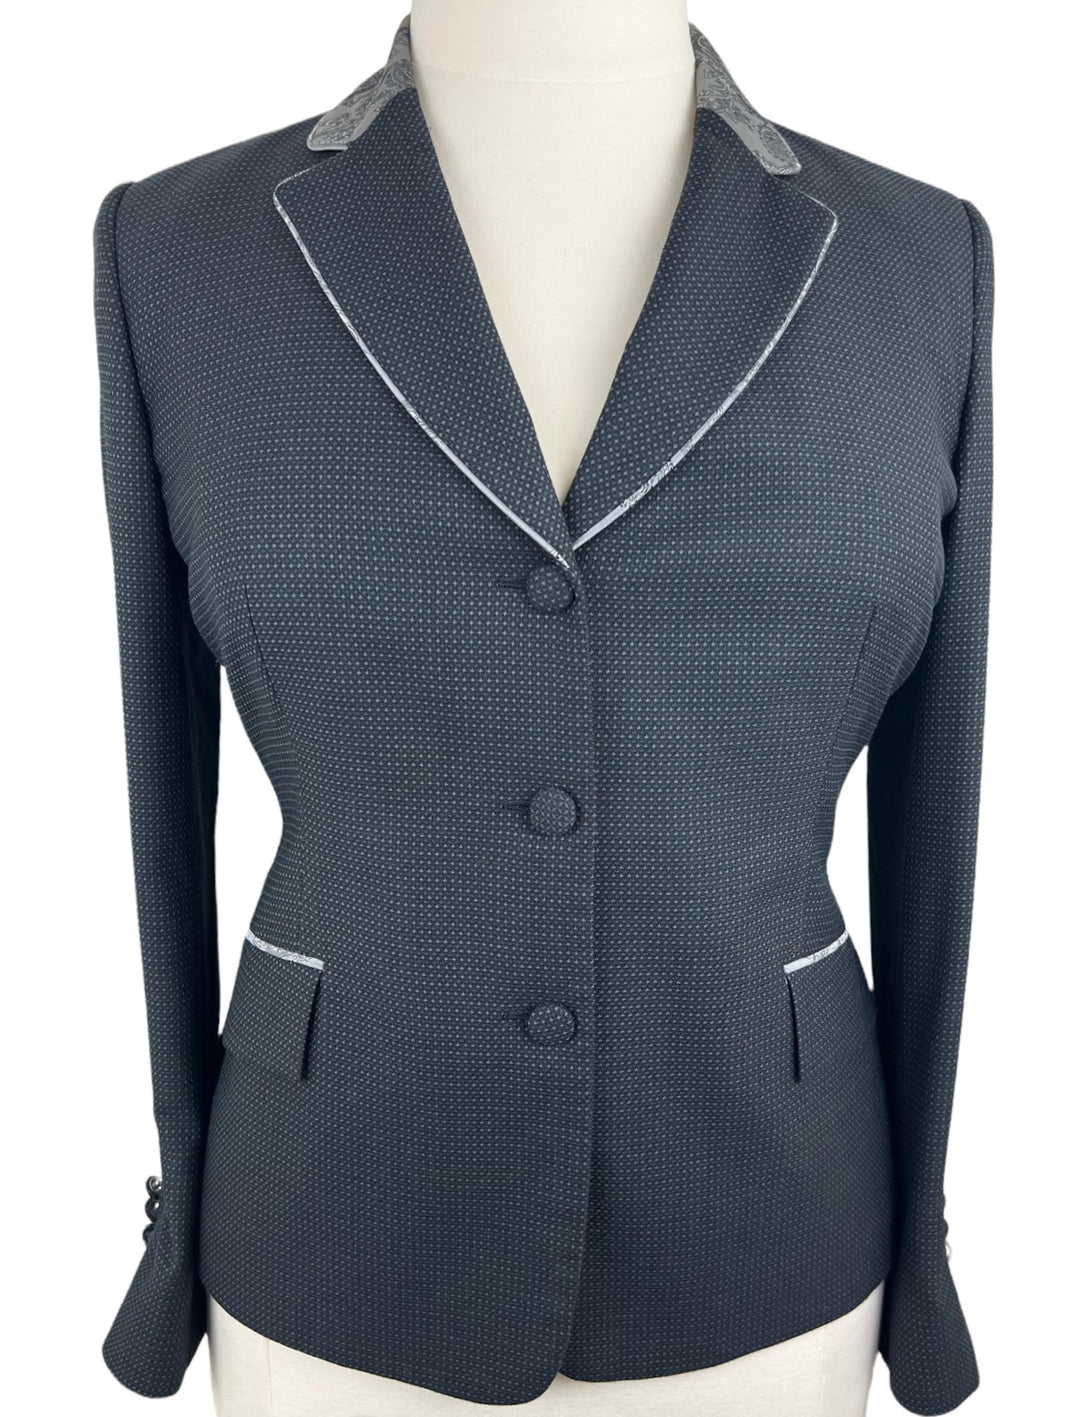 Black & Silver Show Coat (Size 12 Short)